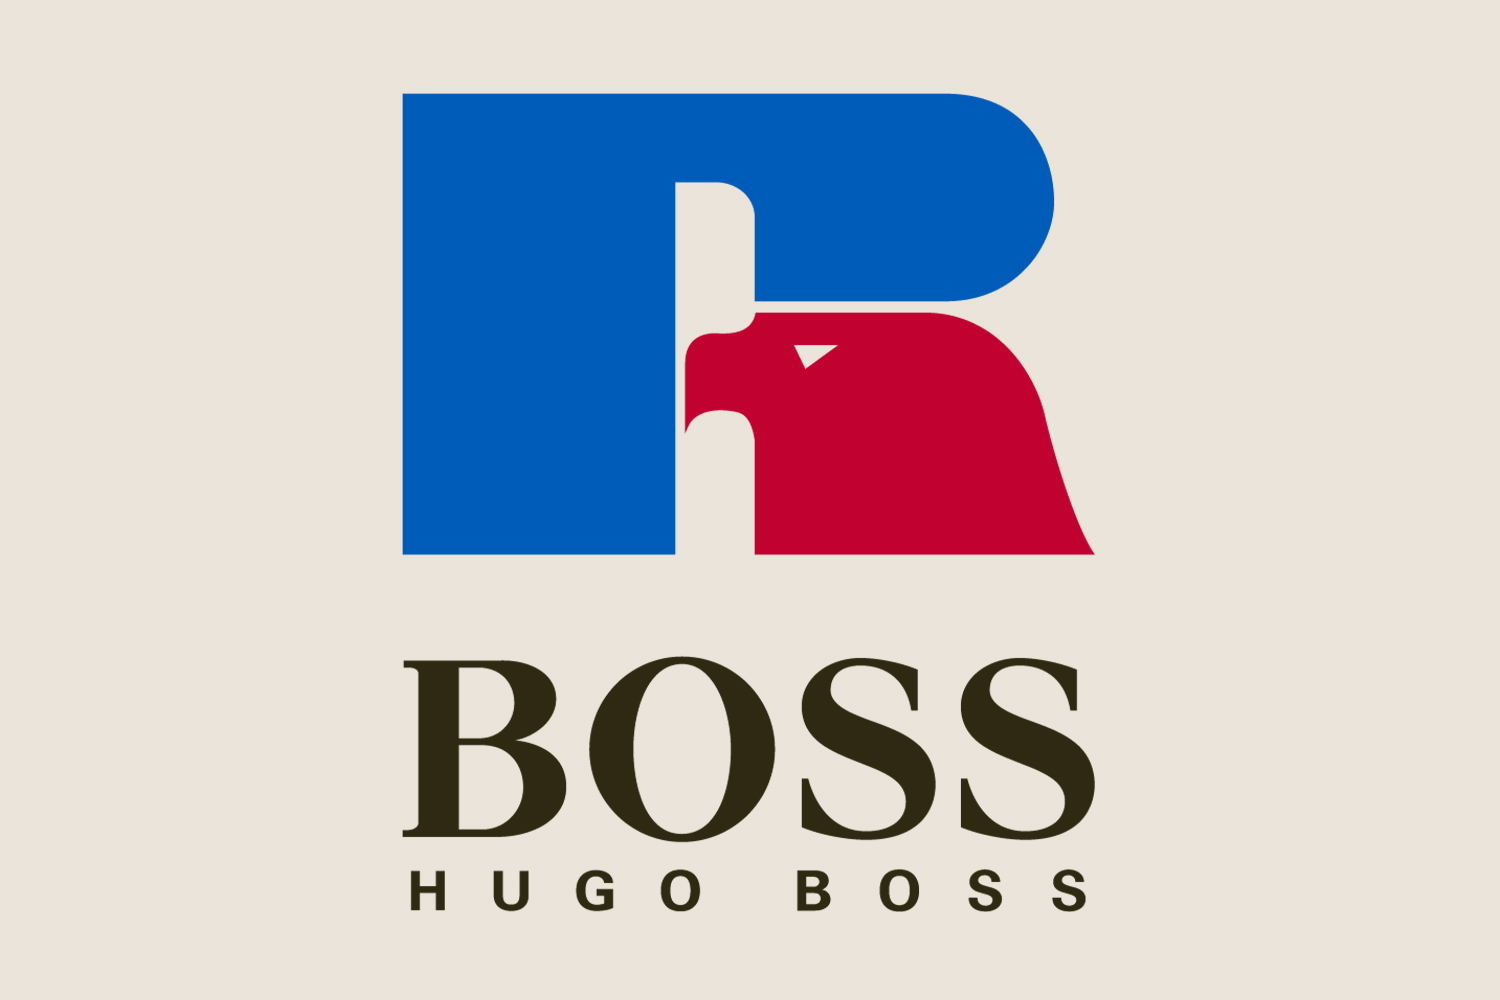 HUGO BOSS Hub Page